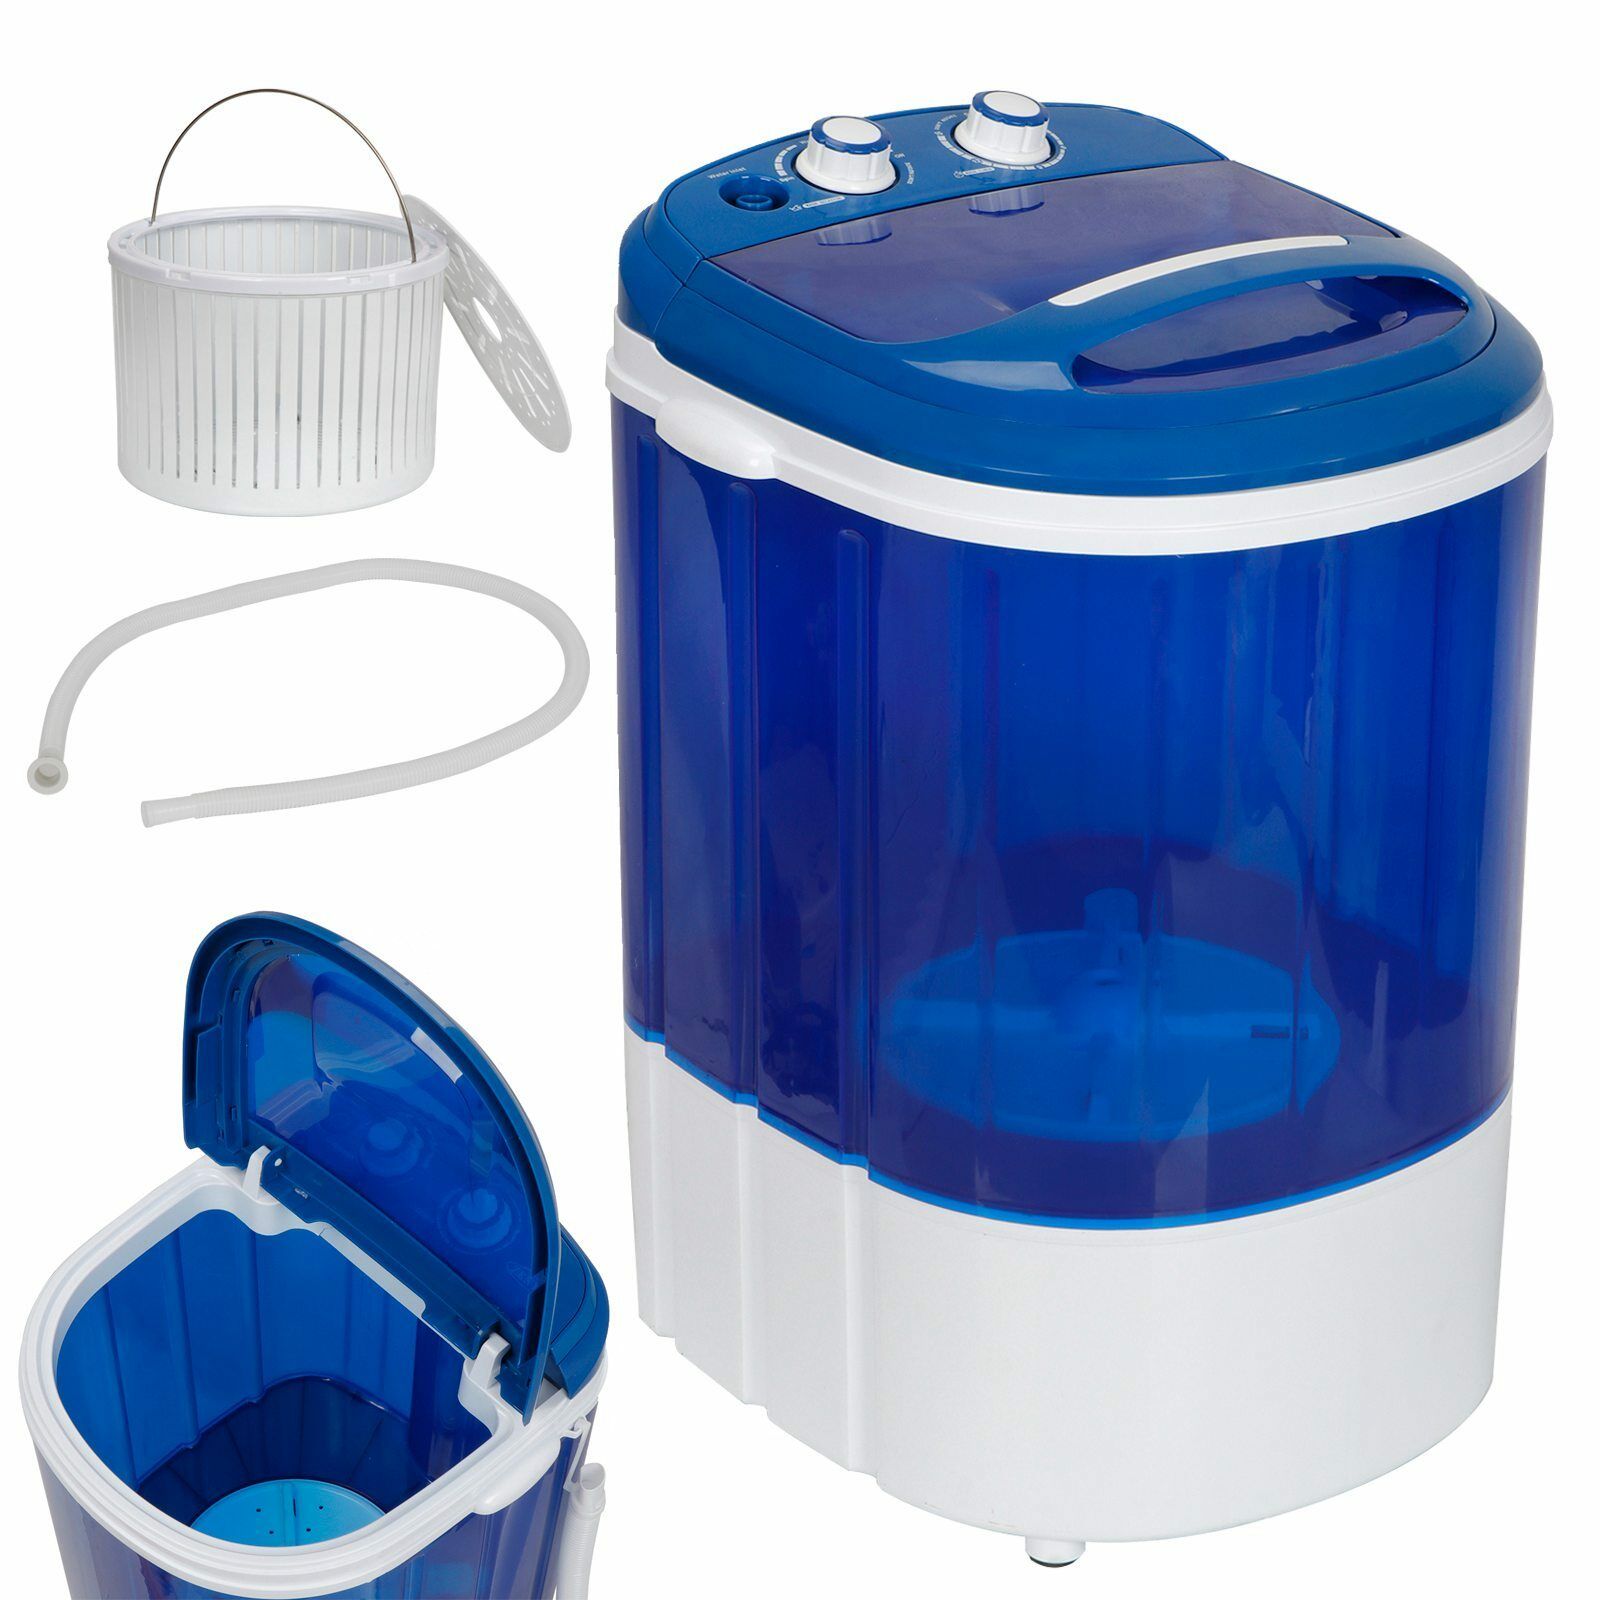 Portable Mini Laundry Washer 9 Lbs Compact Washing Machine Idea Dorm Rooms